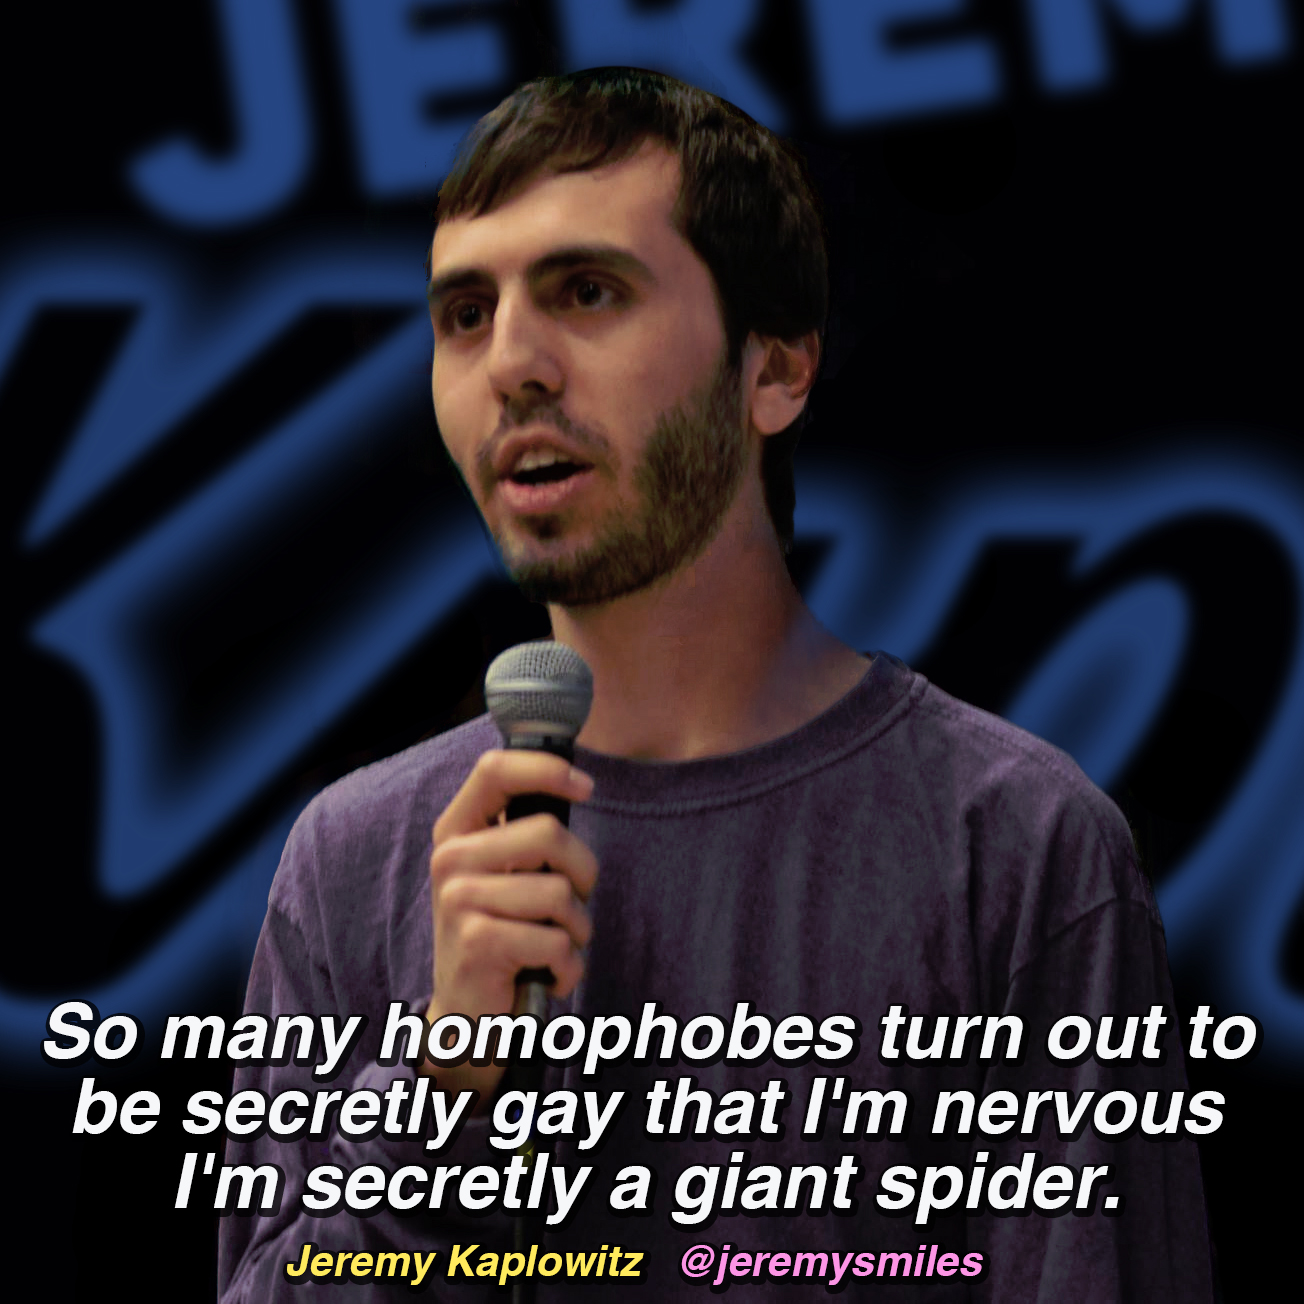 equator monument - So many homophobes turn out to be secretly gay that I'm nervous I'm secretly a giant spider. Jeremy Kaplowitz